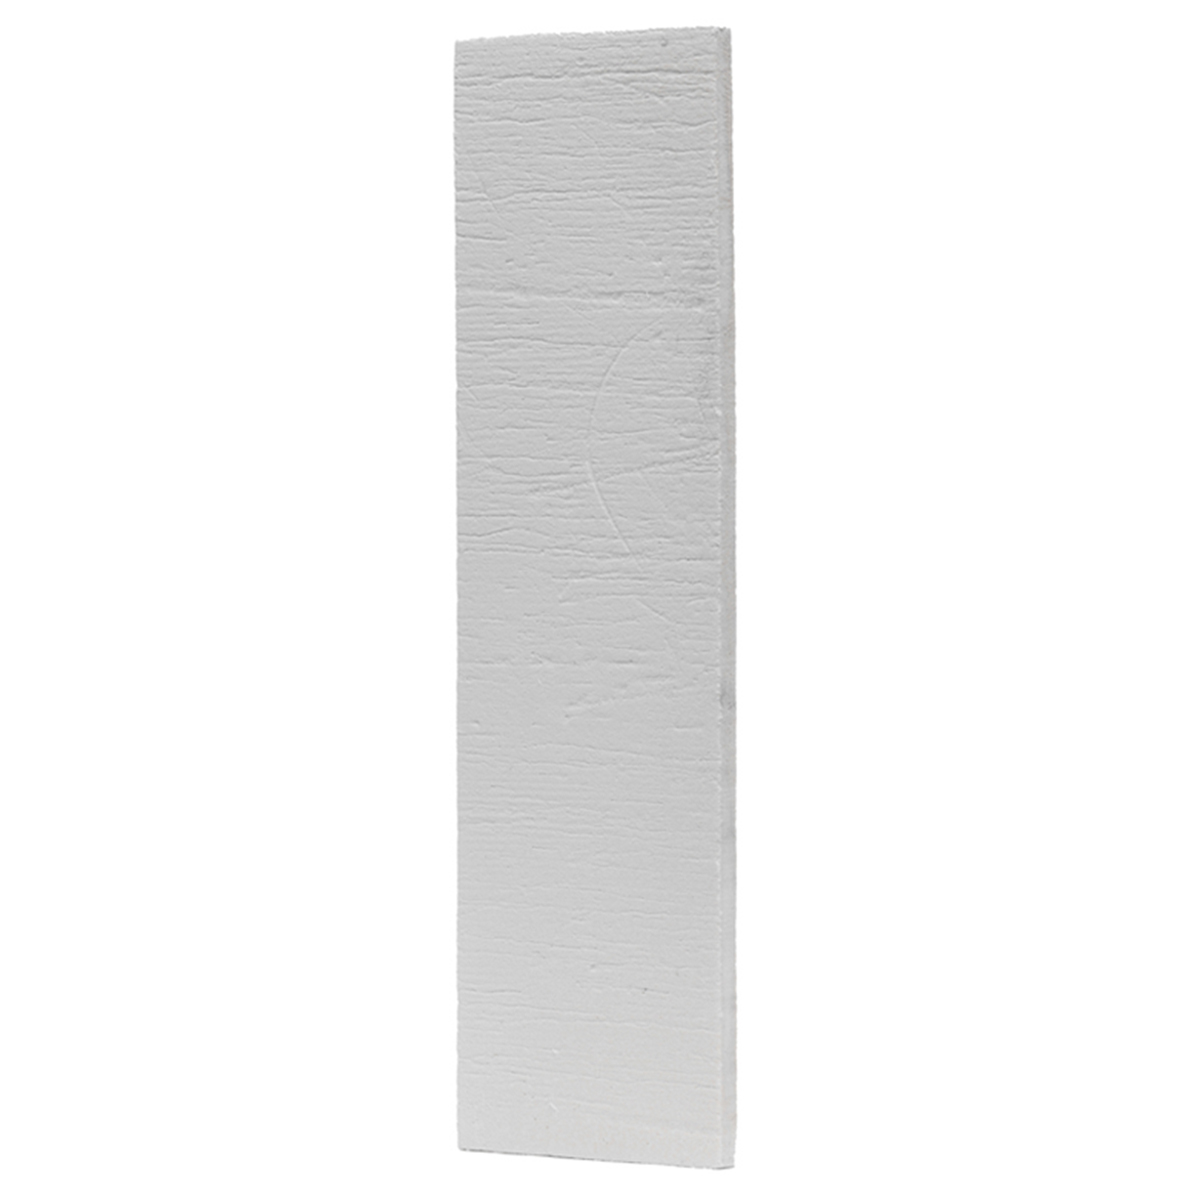 USSC (Wood Insert) Ceramic Fiber Board & Blanket: 88158/88159/88160